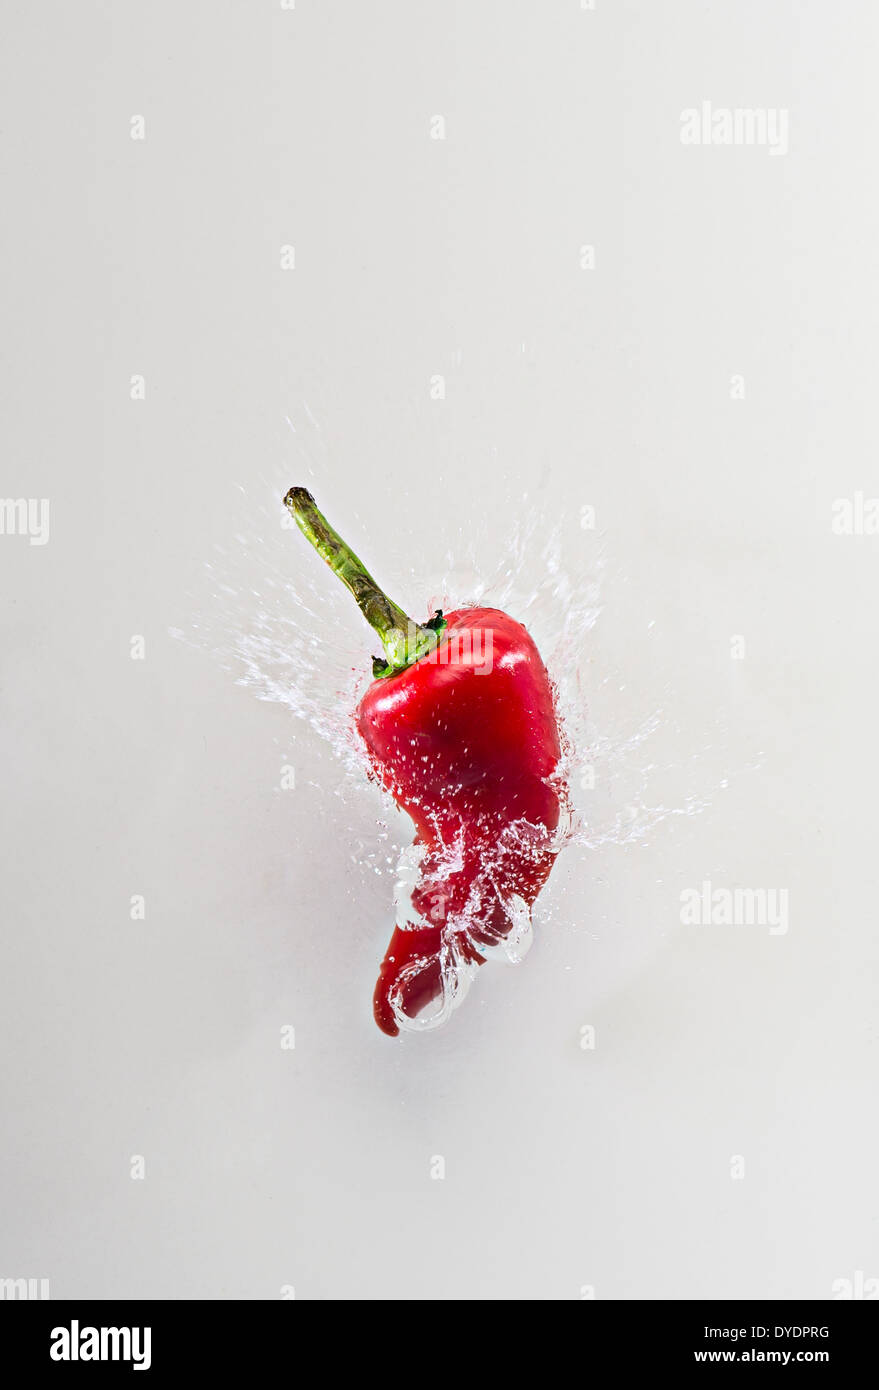 Red Chili Pepper Splashing In Water, White Background Stock Photo